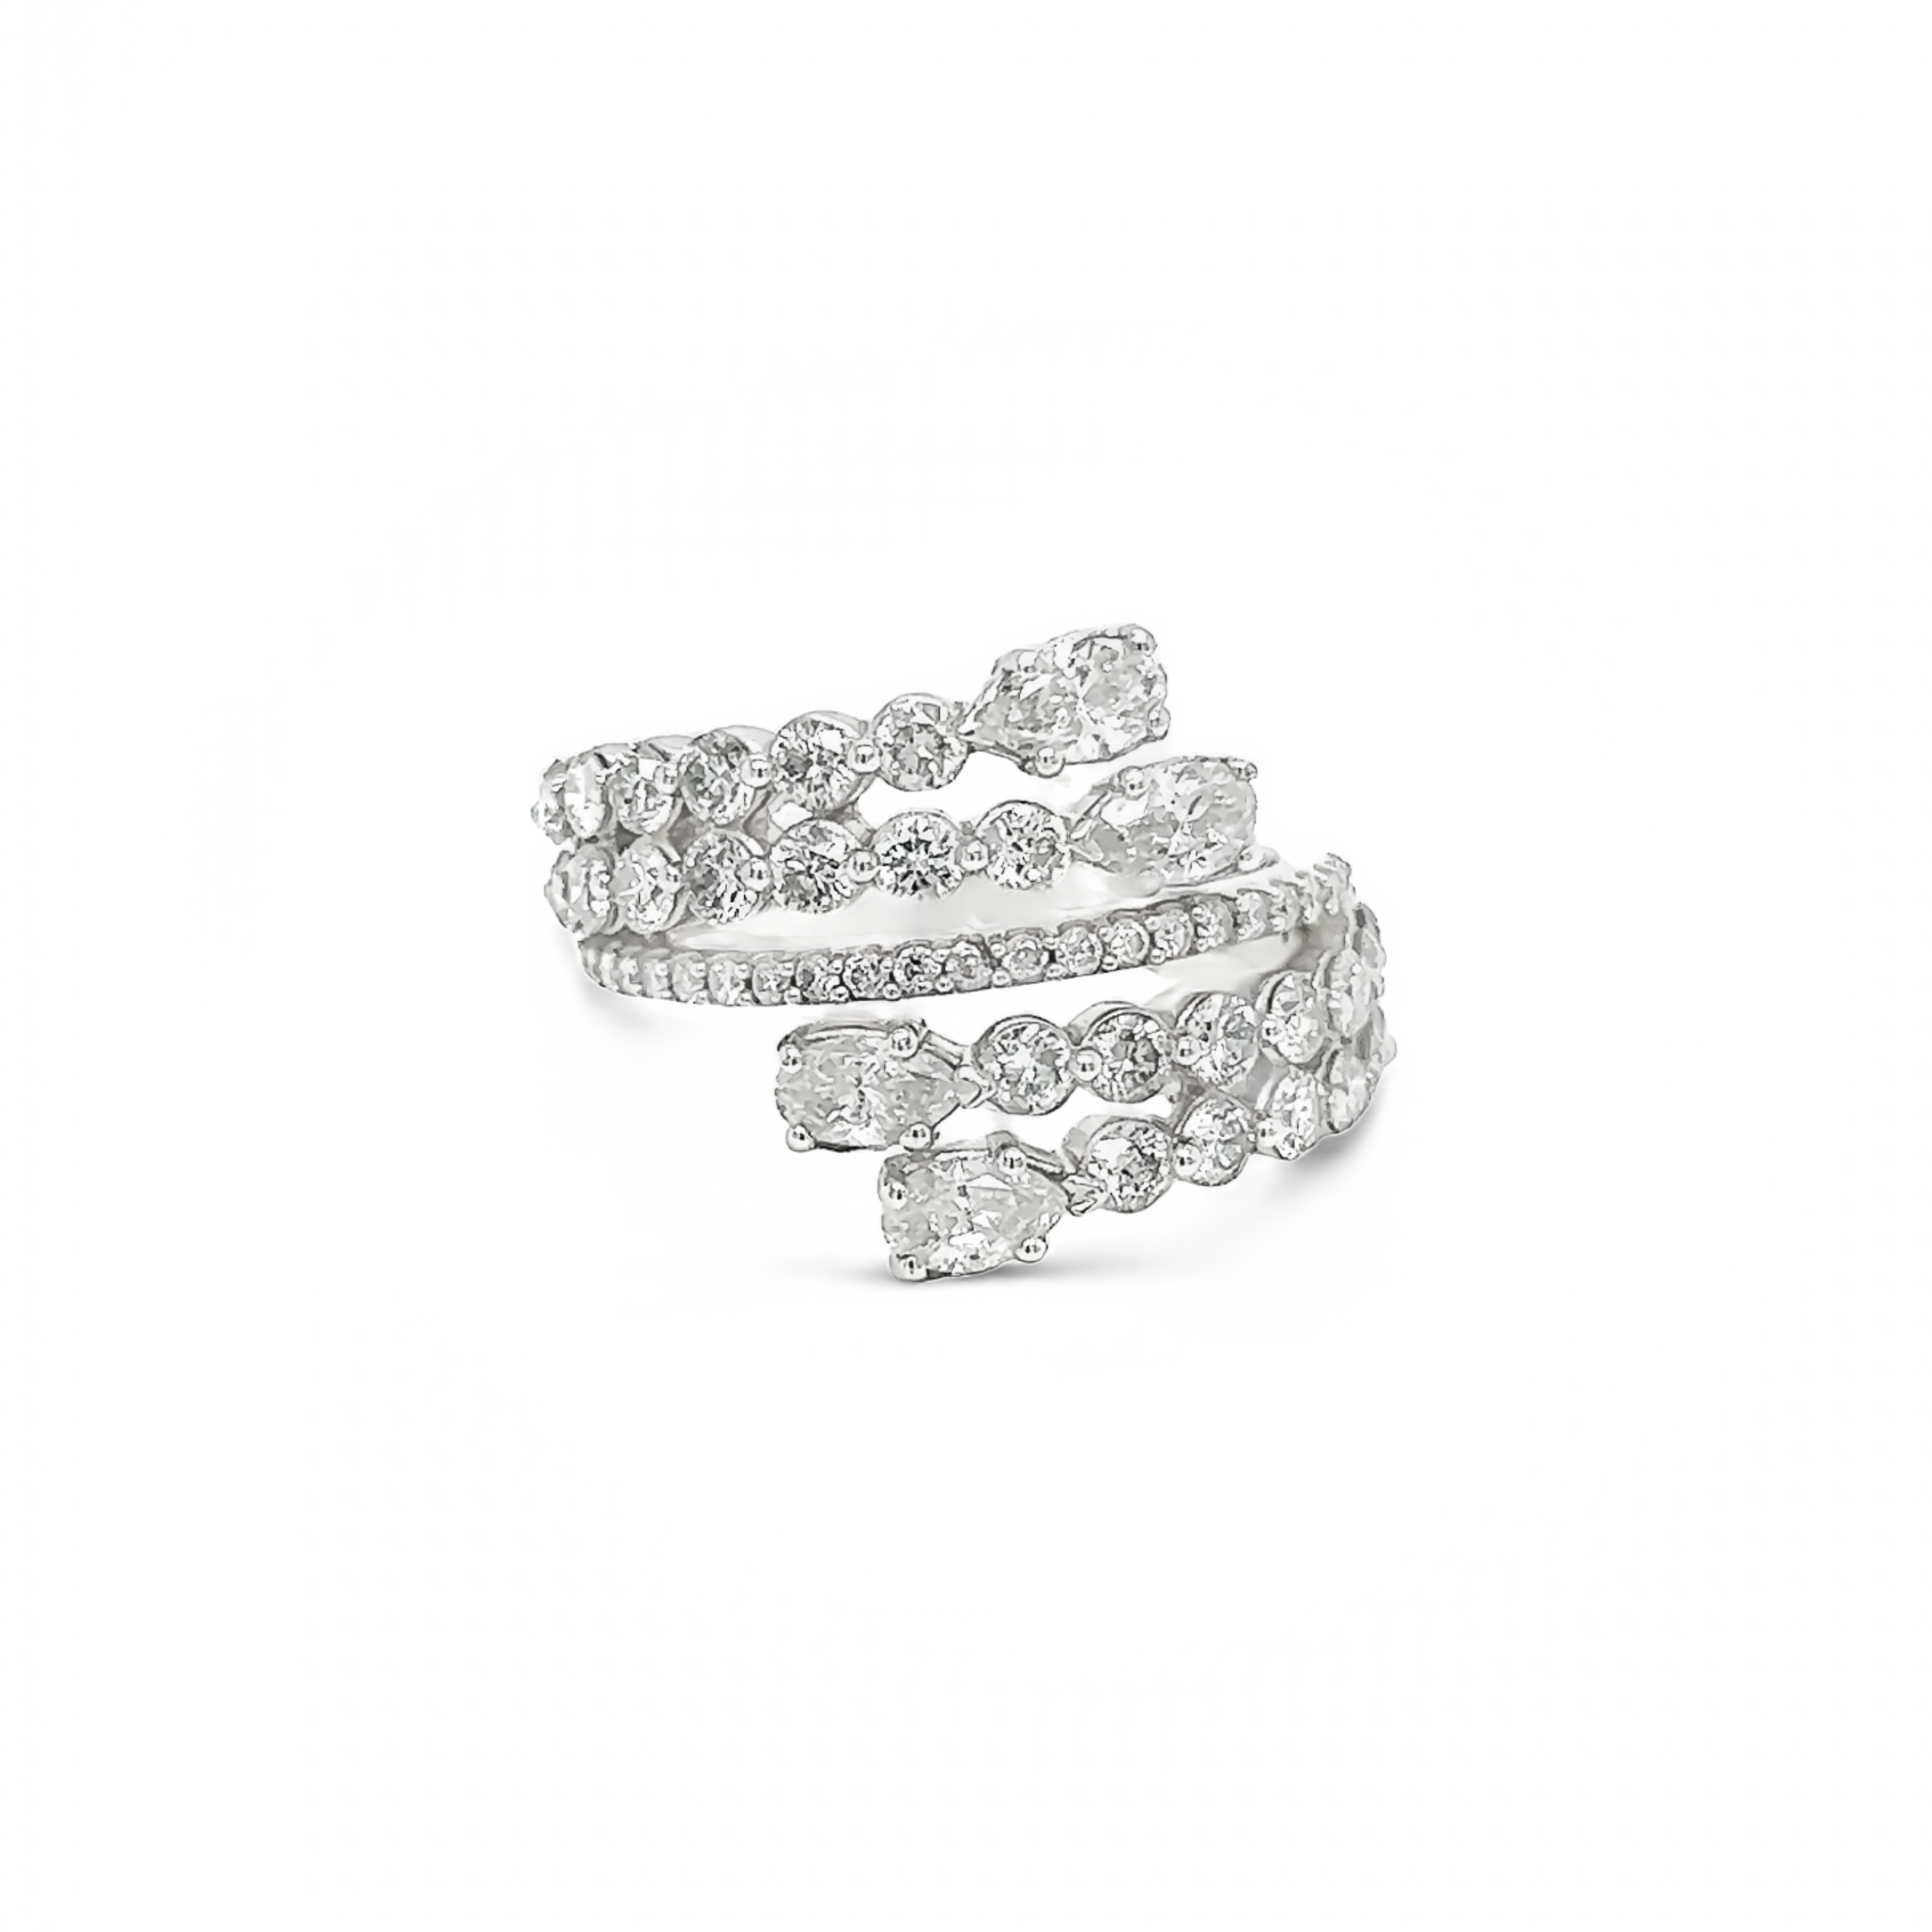 White 14 Karat Contemporary Fashion Ring with 4=0.77tw Pear G I Diamonds and   51=1.56tw Round Brilliant G I Diamonds